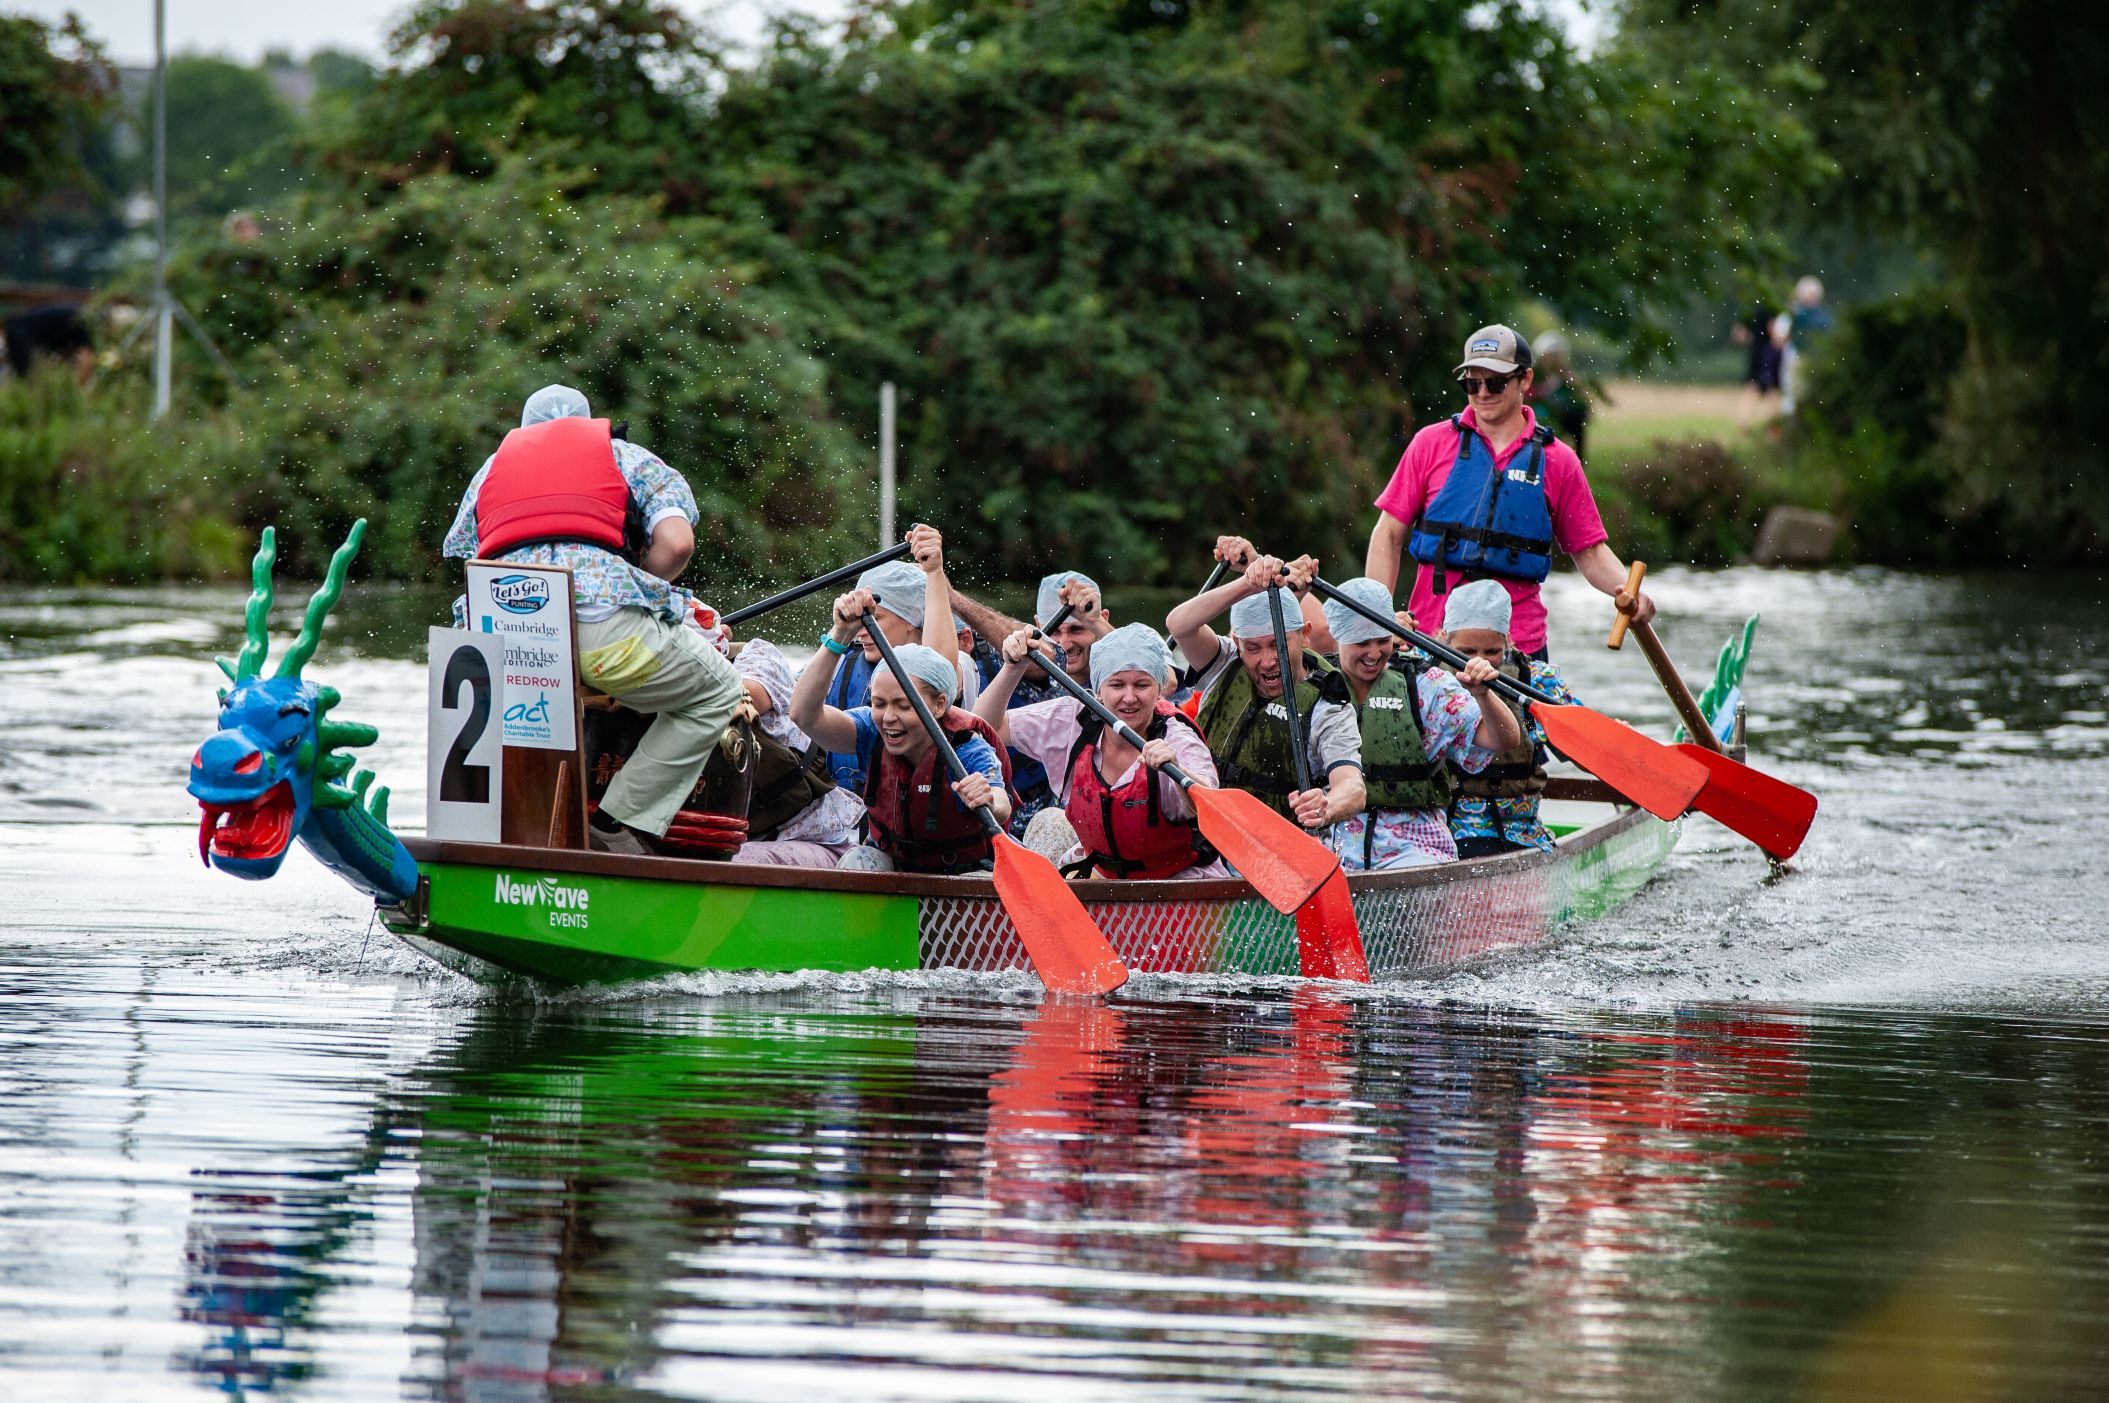 Cambridge dragon boat festival team on water